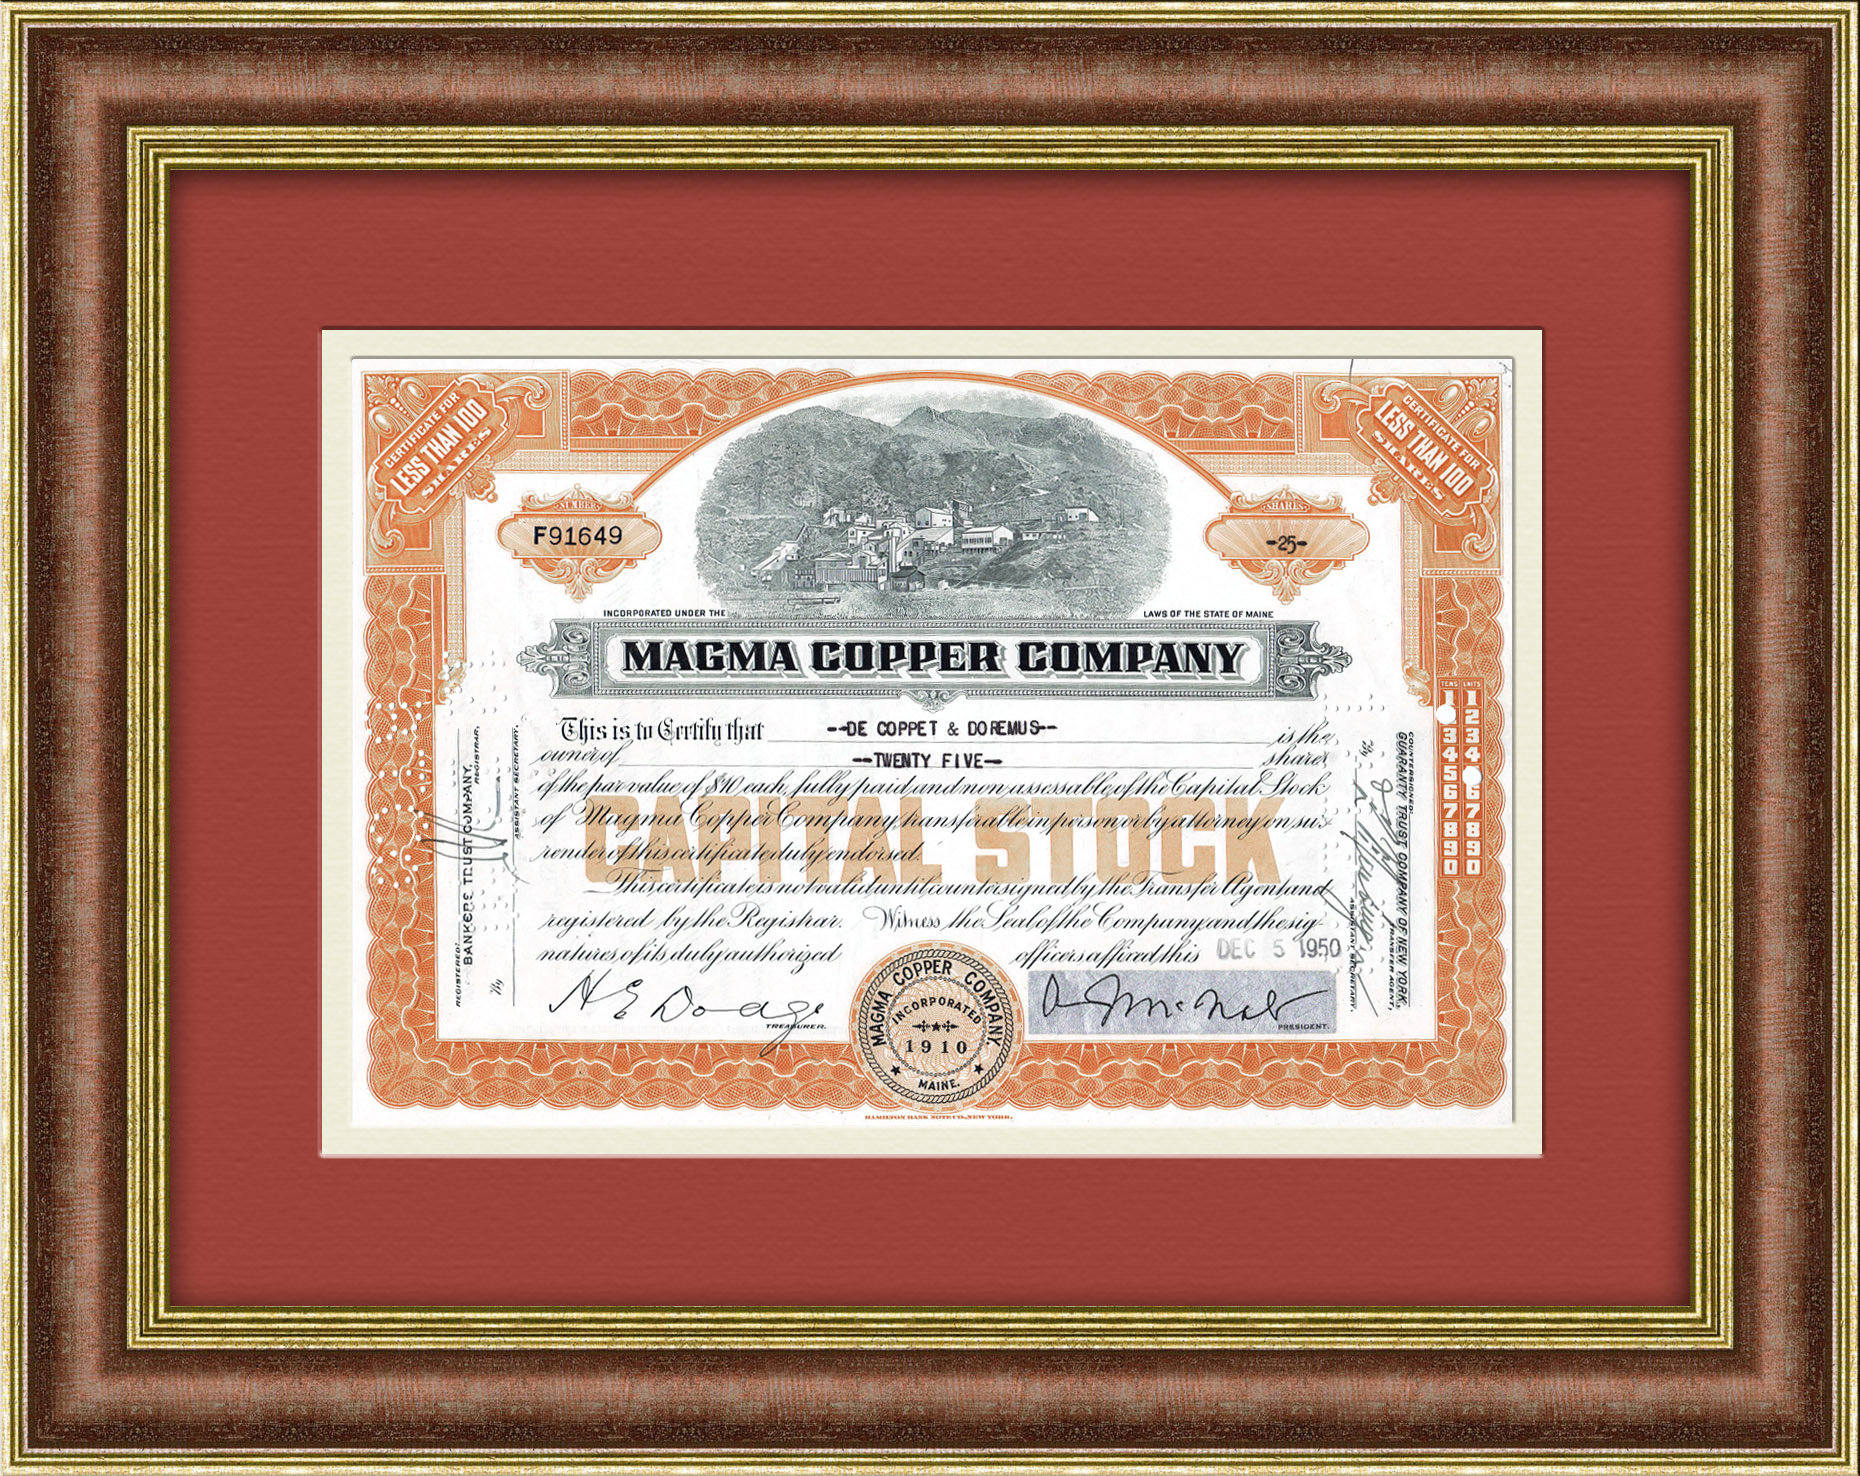 фото Сертификат медной компании magma copper company на 25 акций 1958 год сша